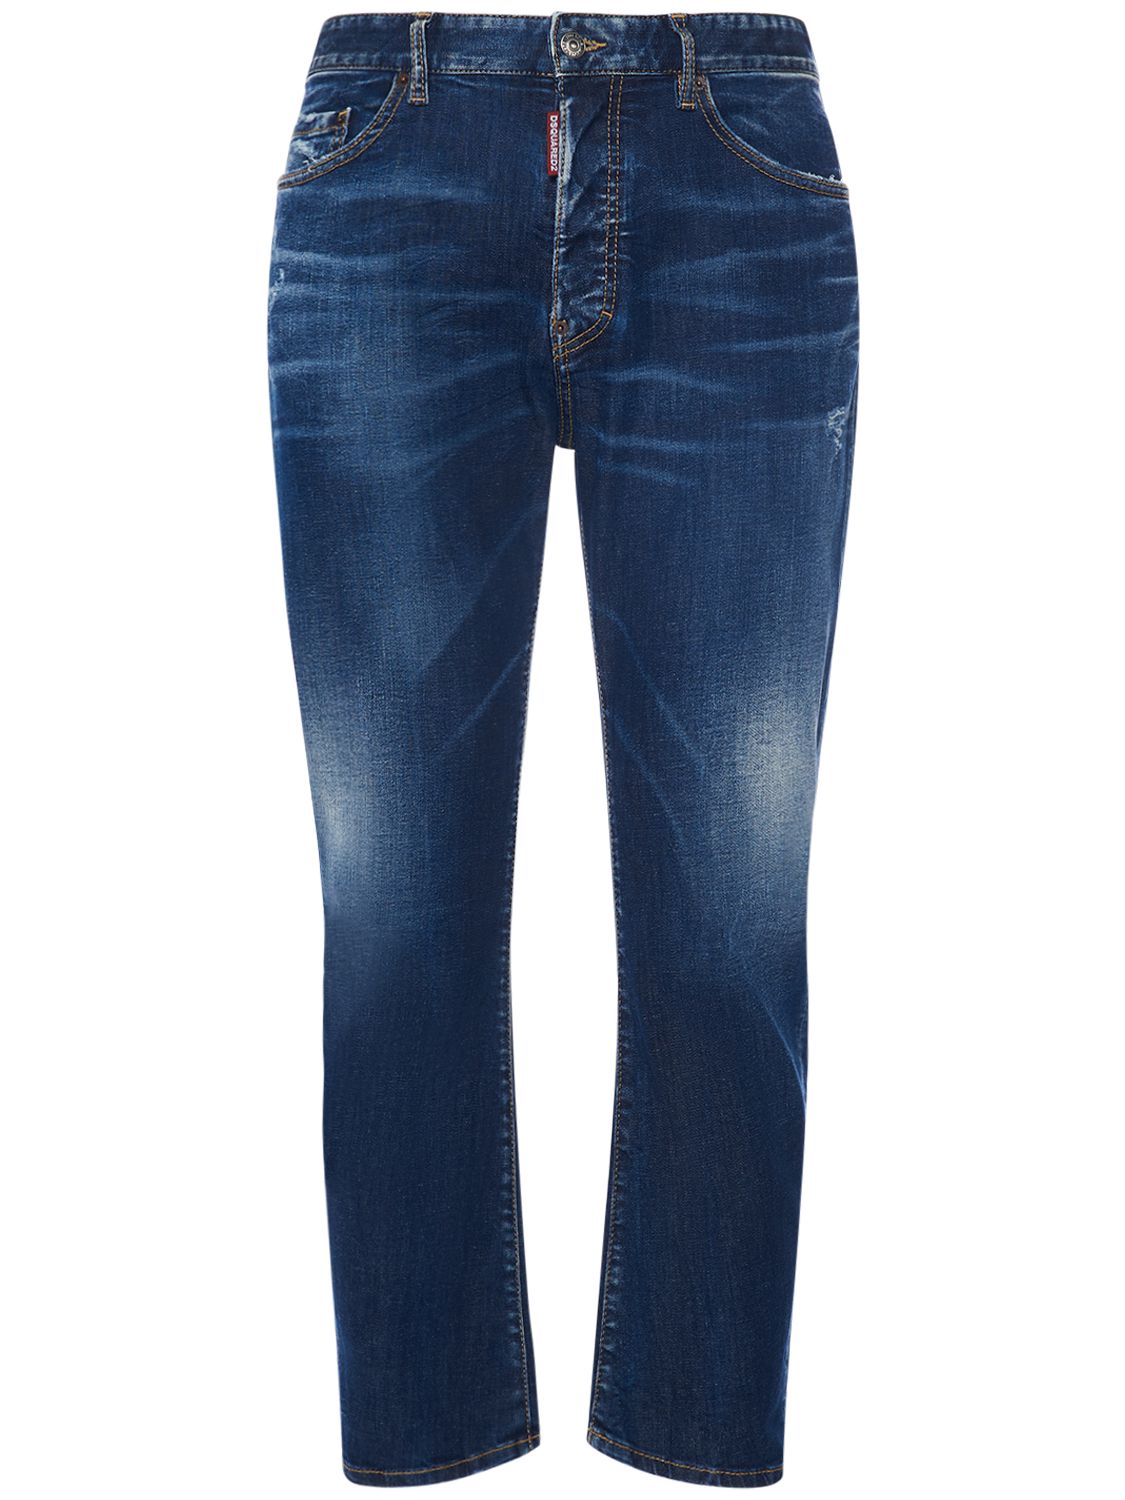 Image of Bro Stretch Cotton Denim Jeans